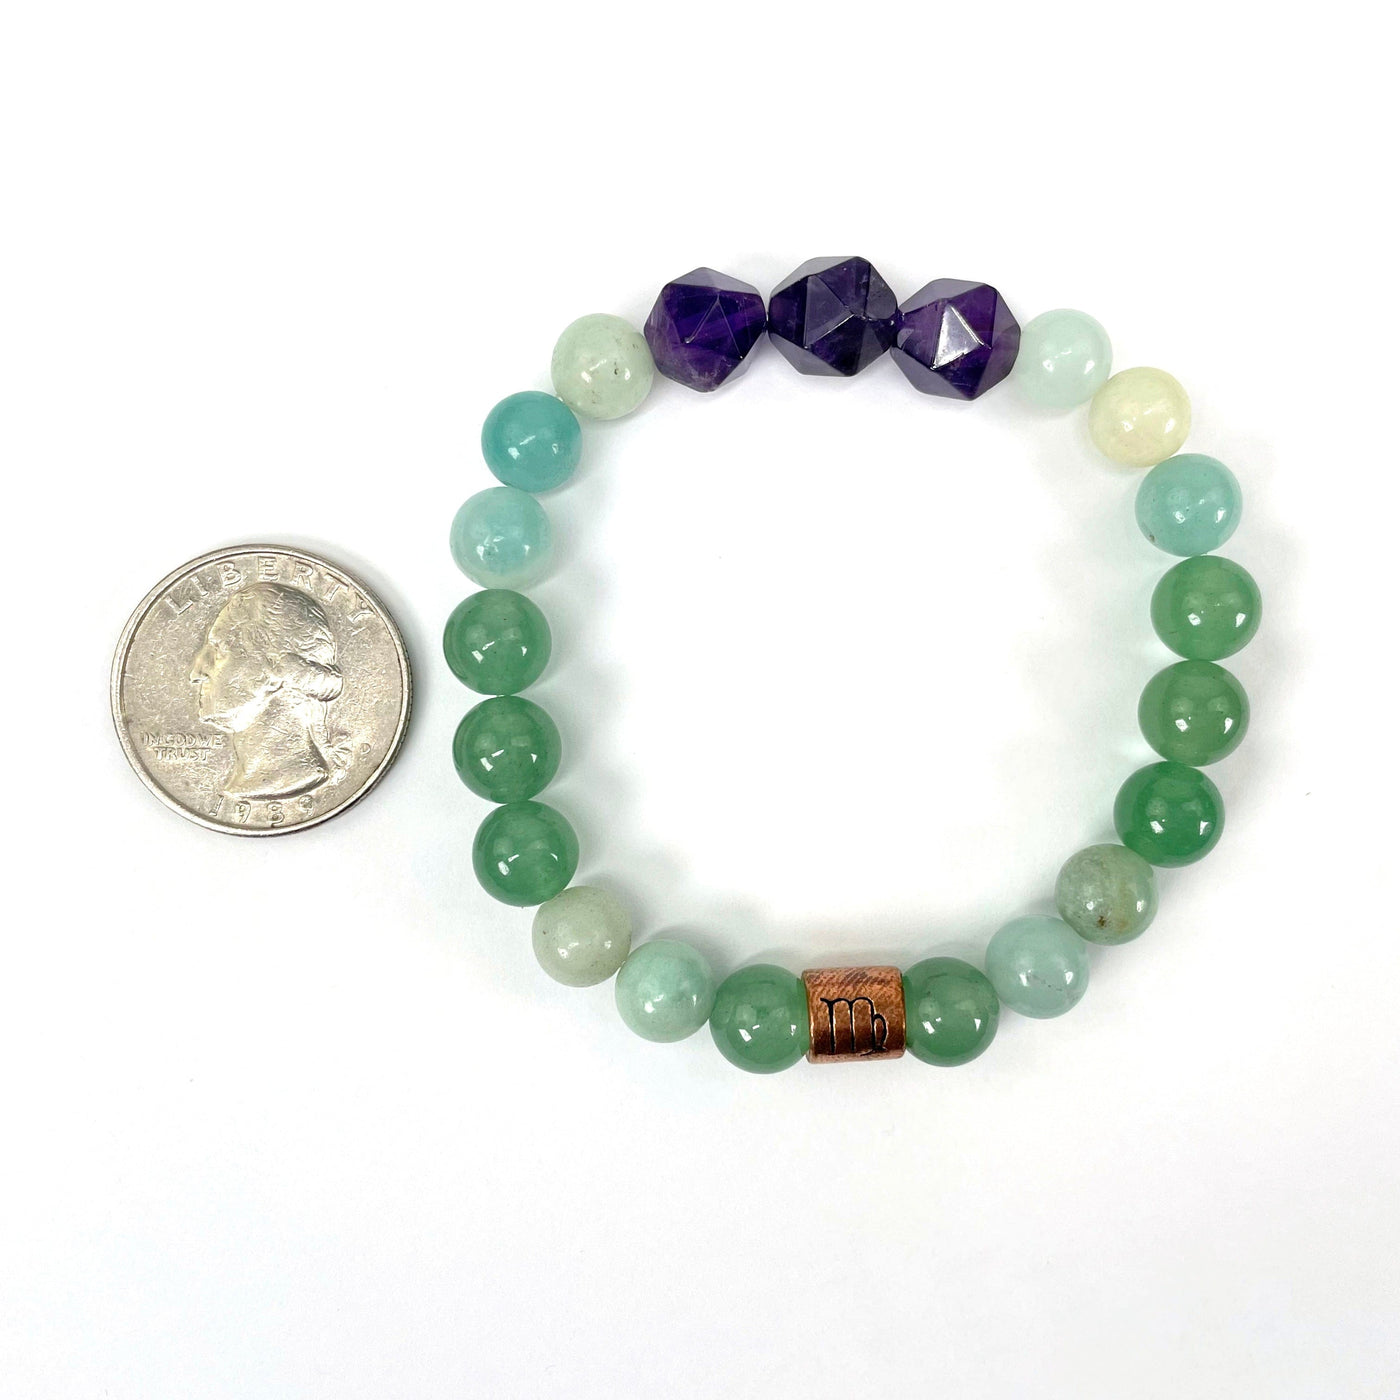 virgo zodiac bracelet with quarter for size reference